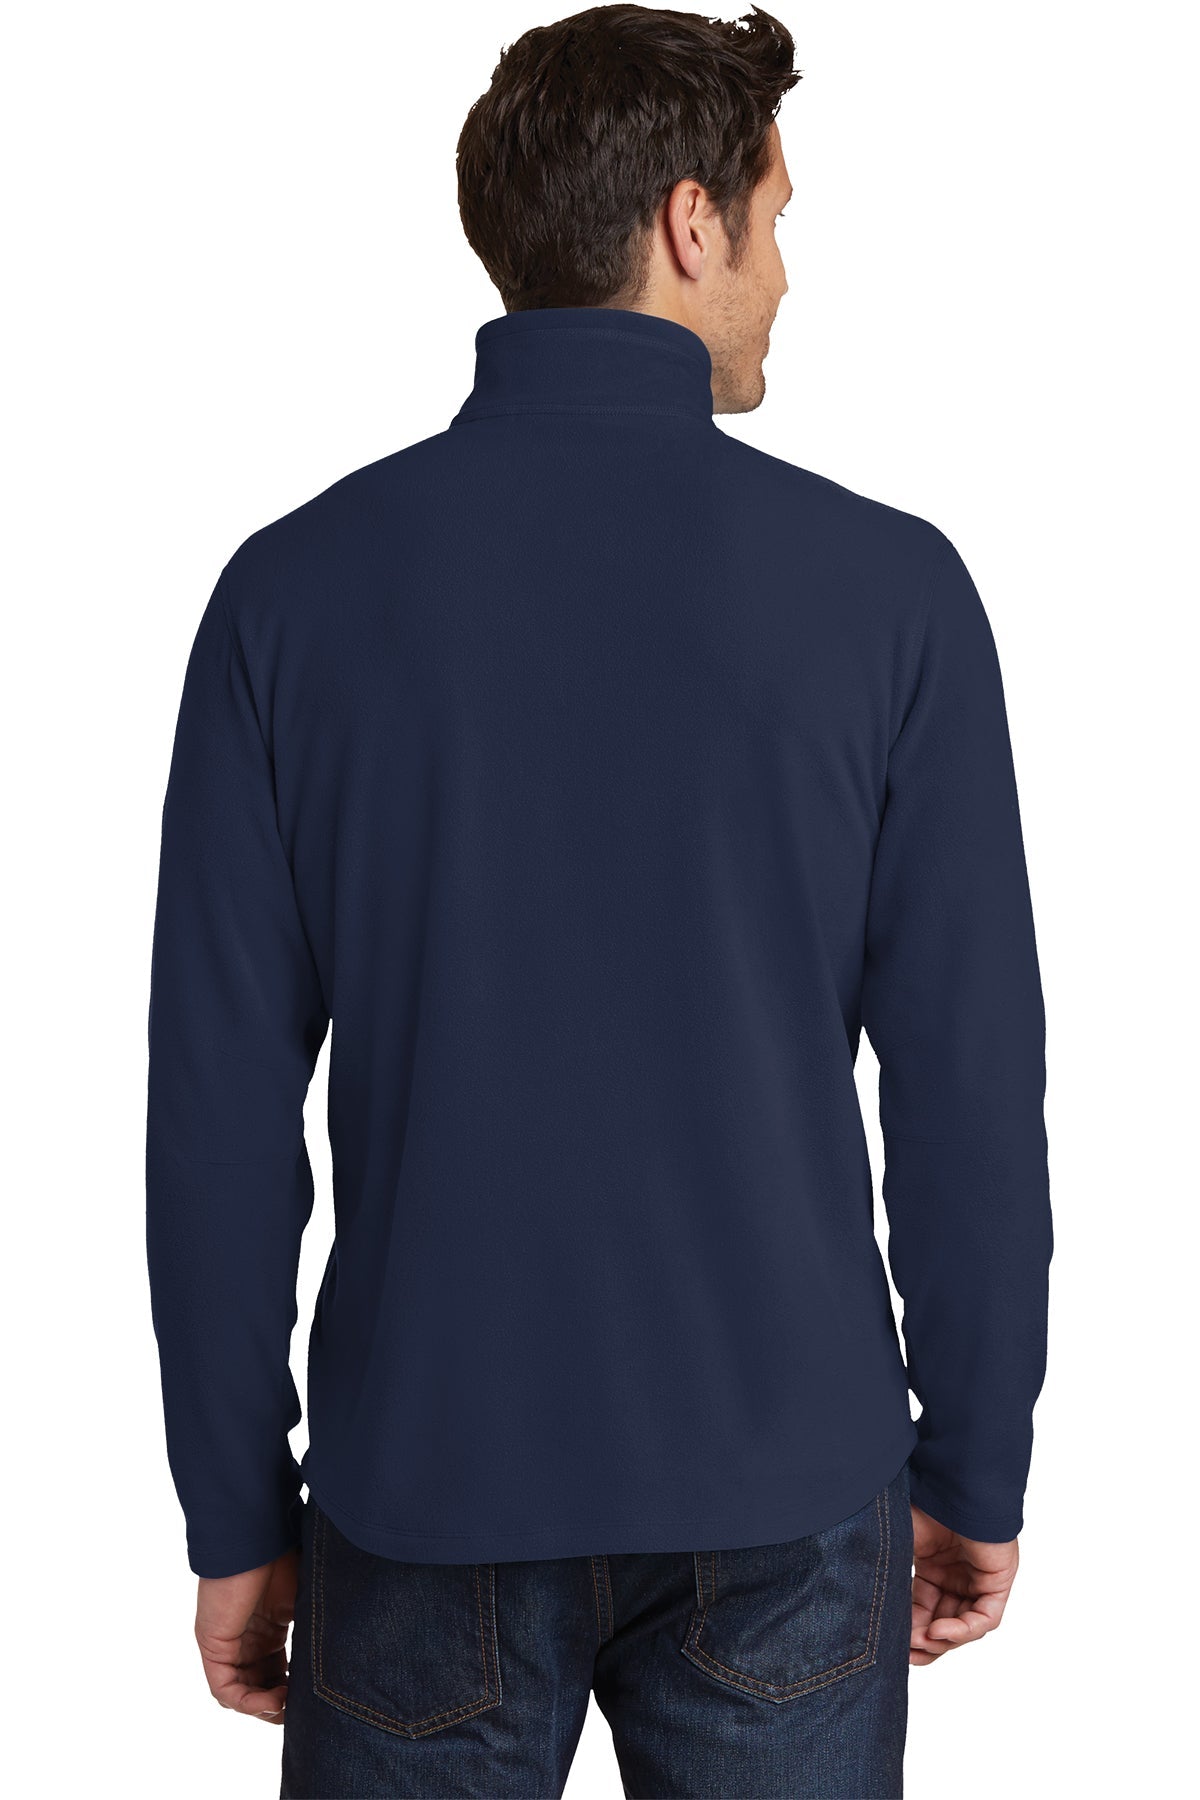 eddie bauer_eb226 _navy_company_logo_sweatshirts